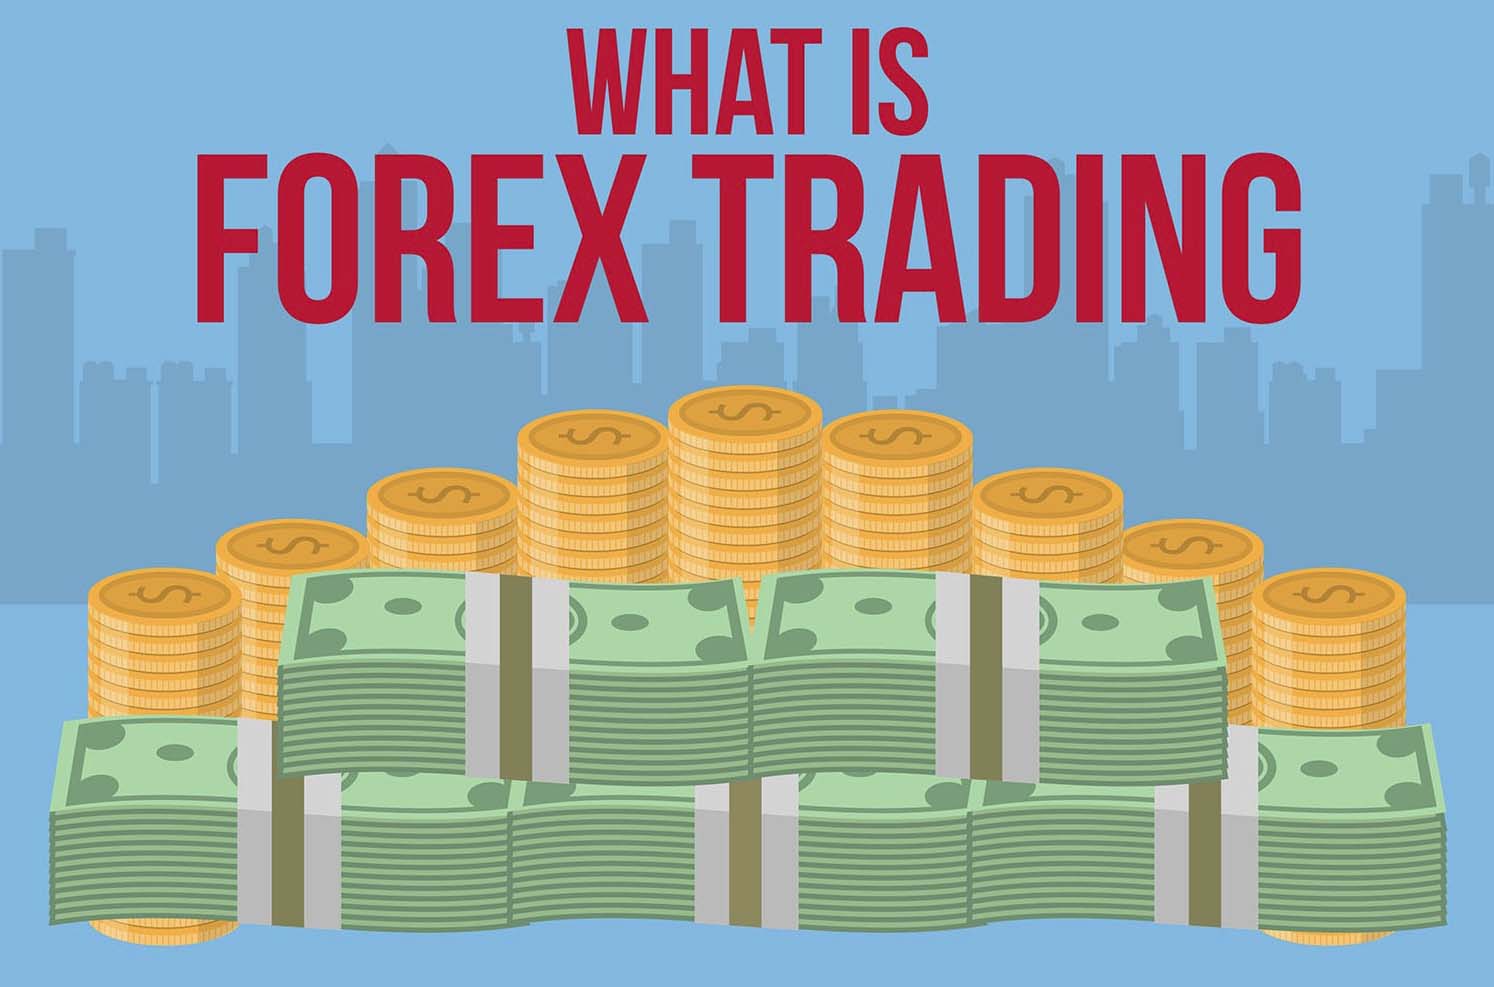 Forax trading